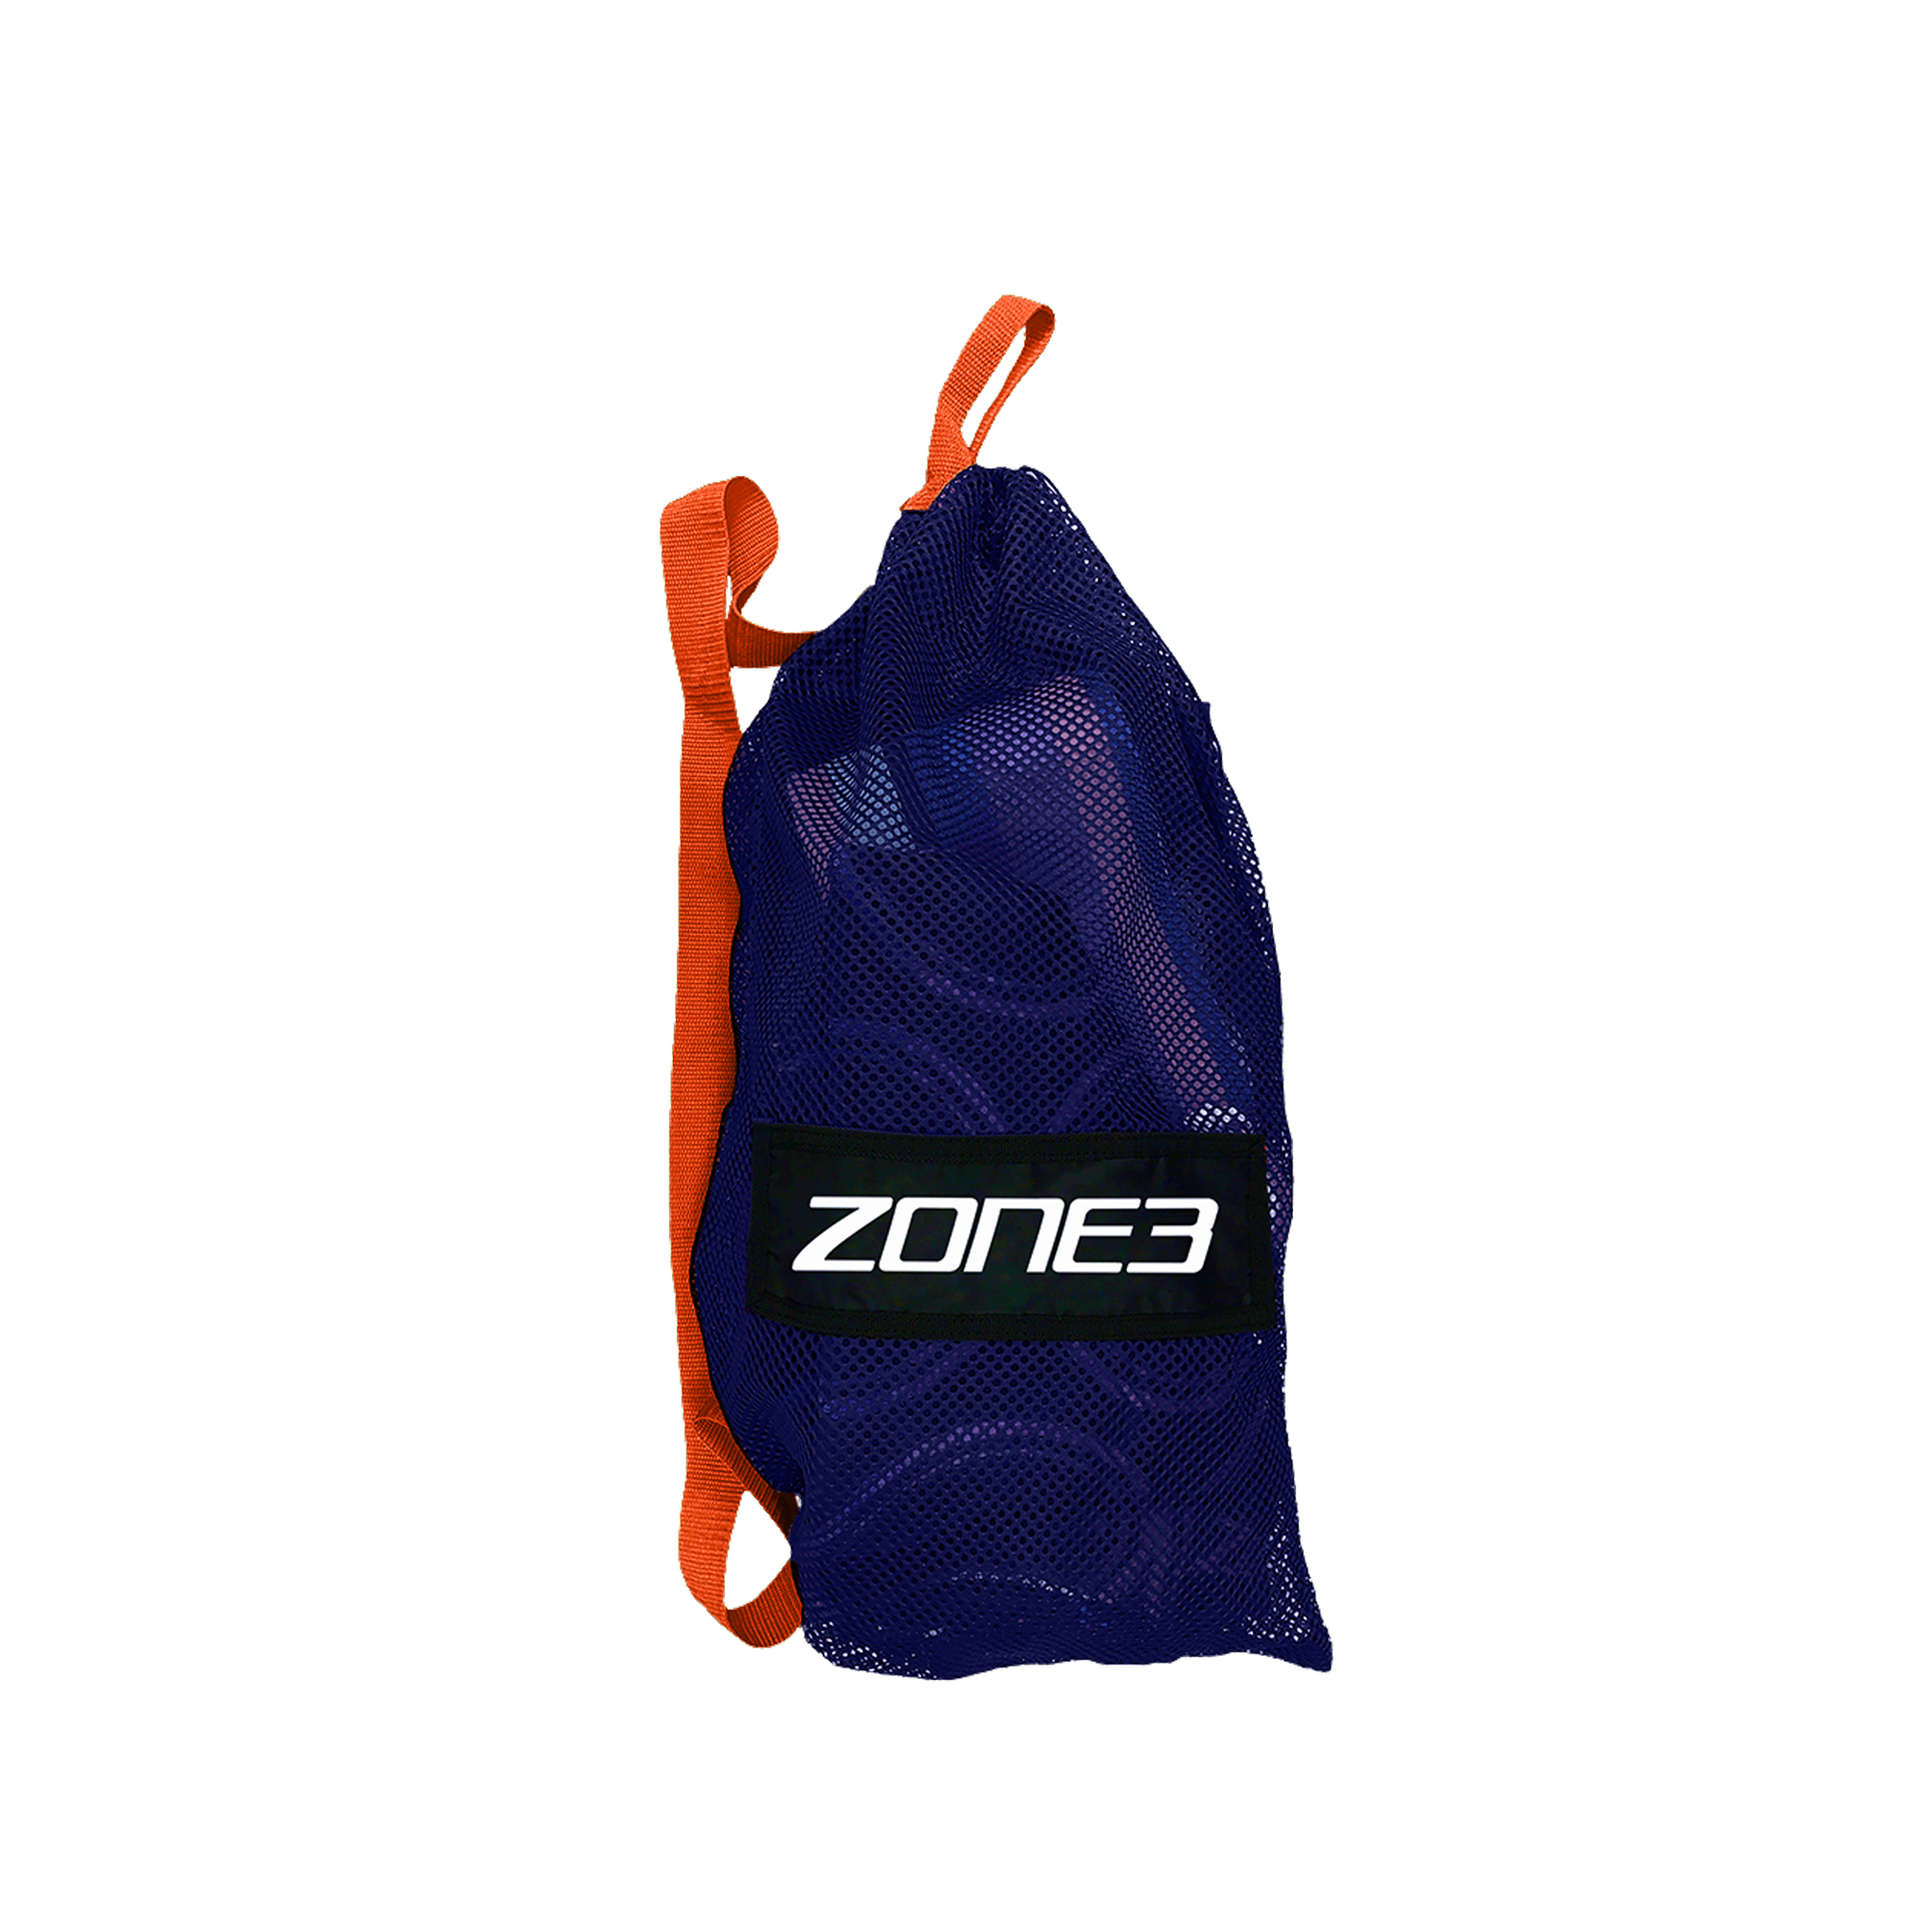 Zone3 Mesh Training Bag Small